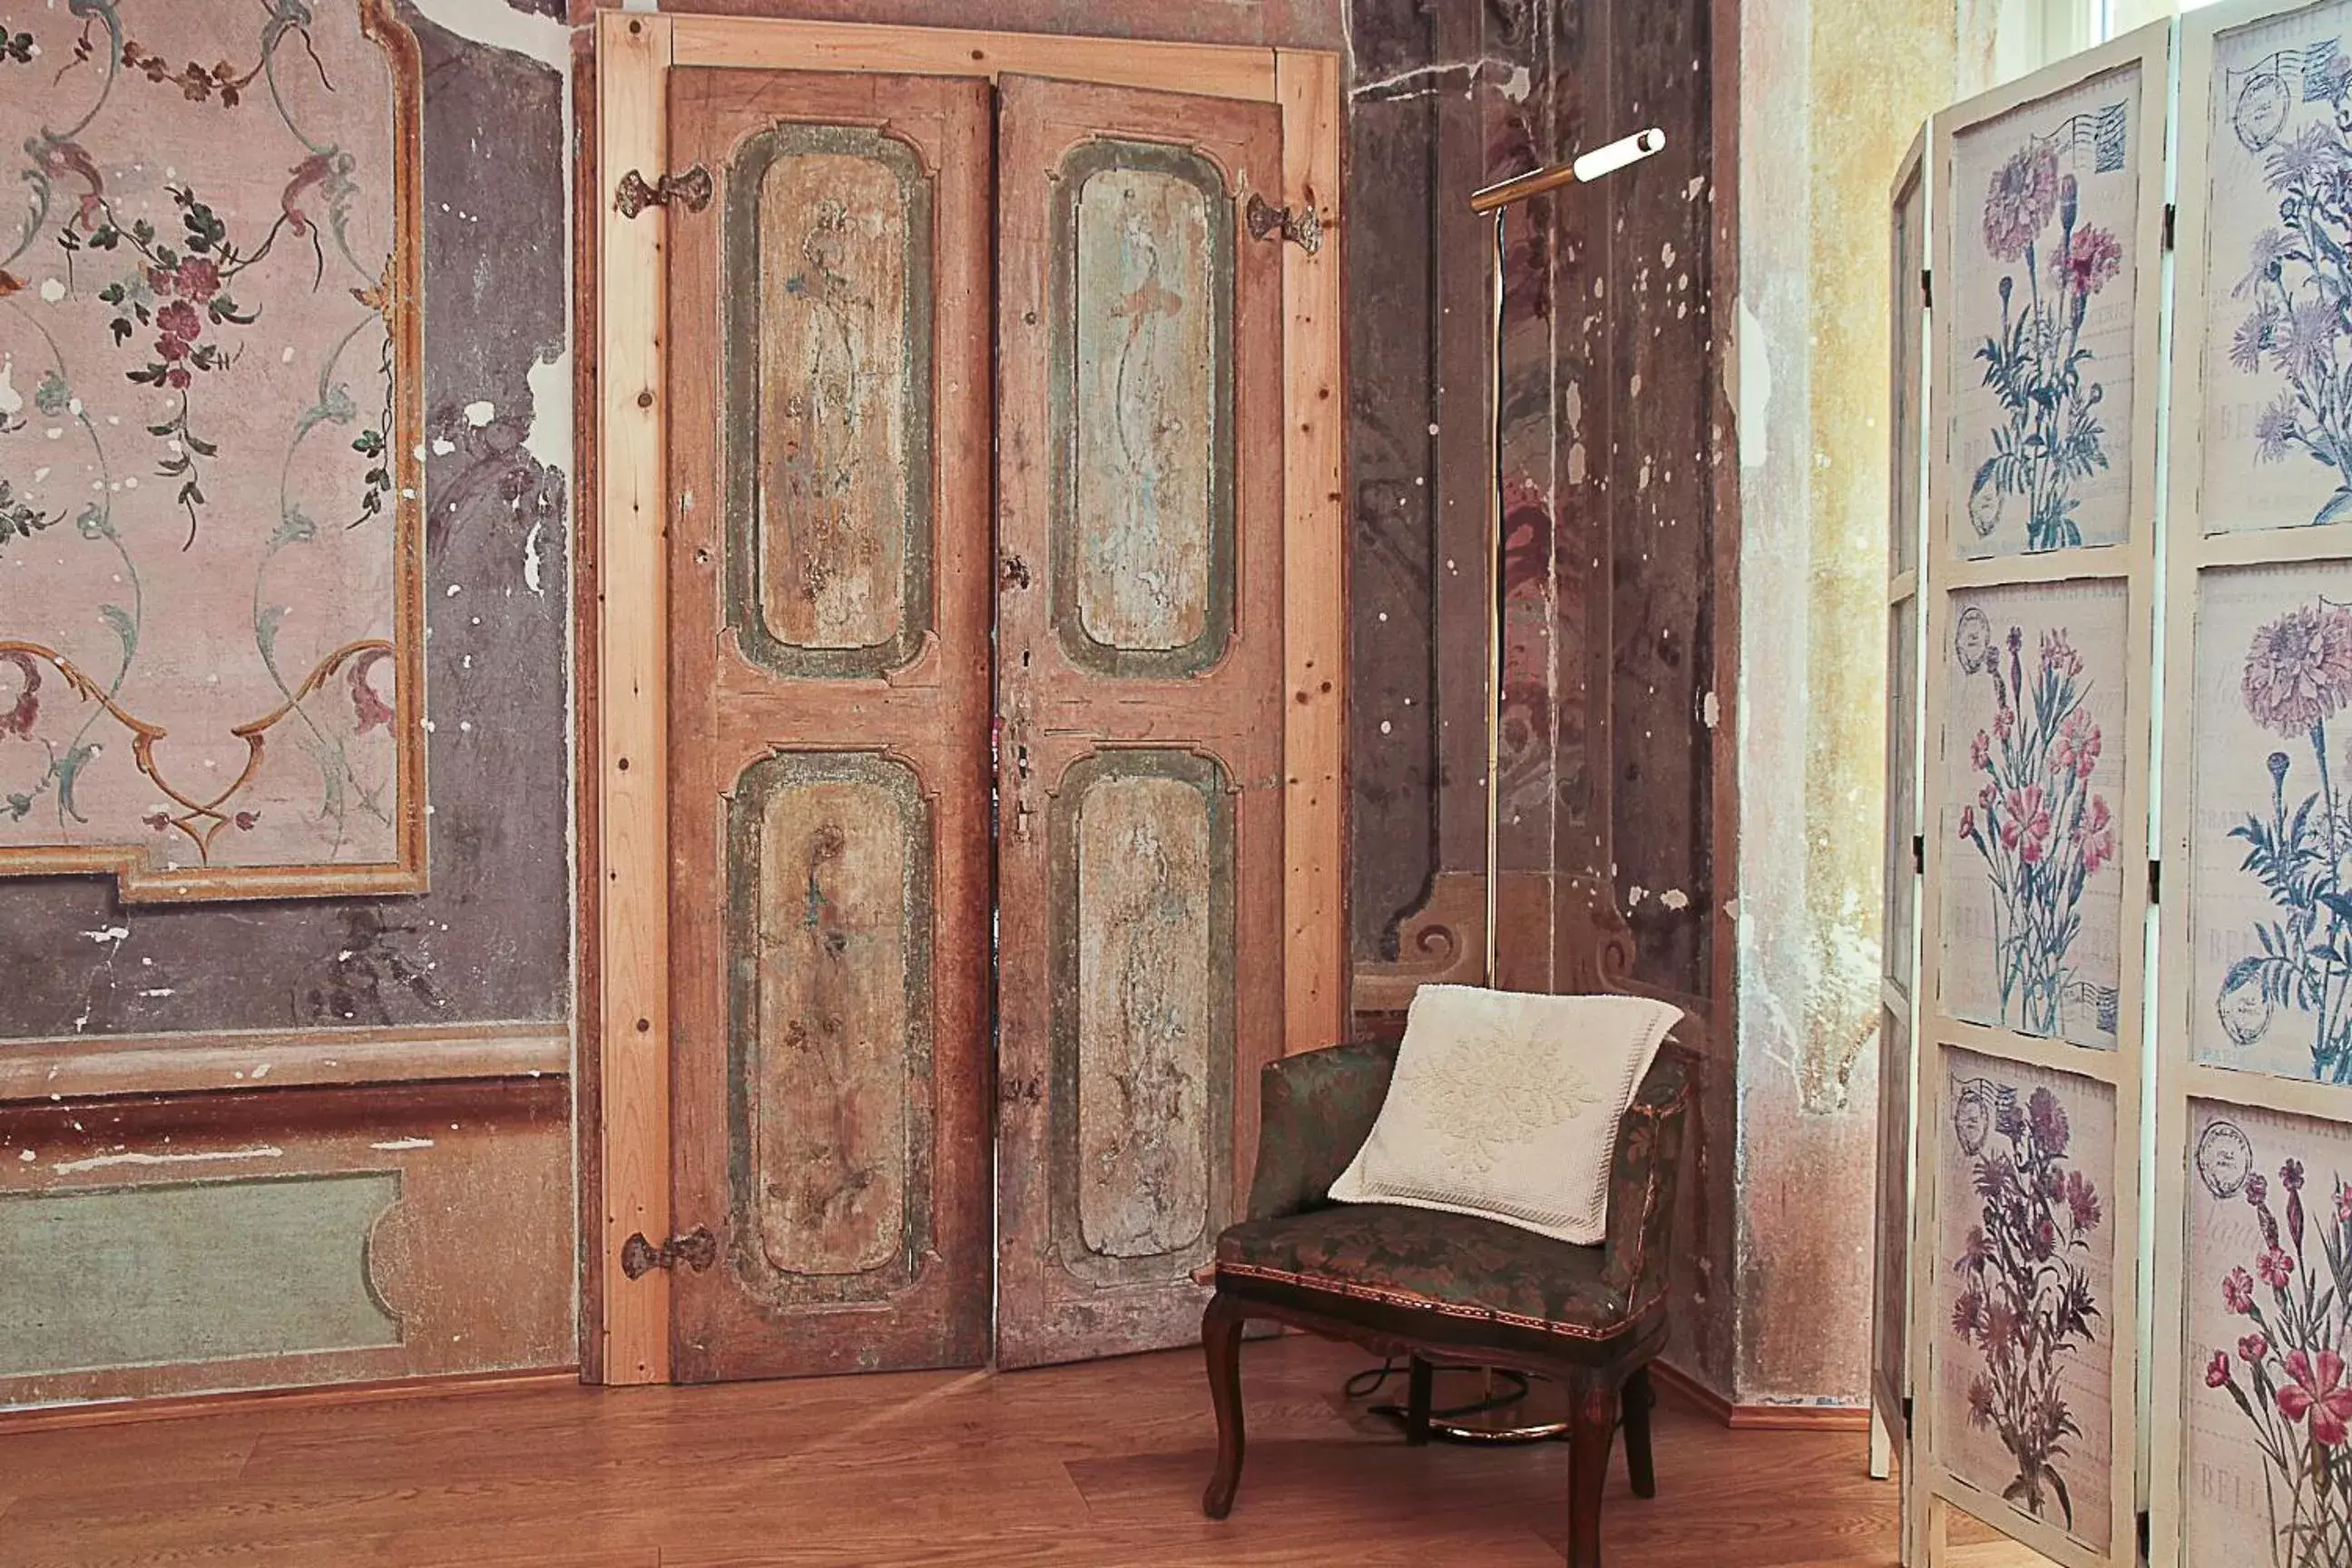 Decorative detail, Seating Area in Stile Libero